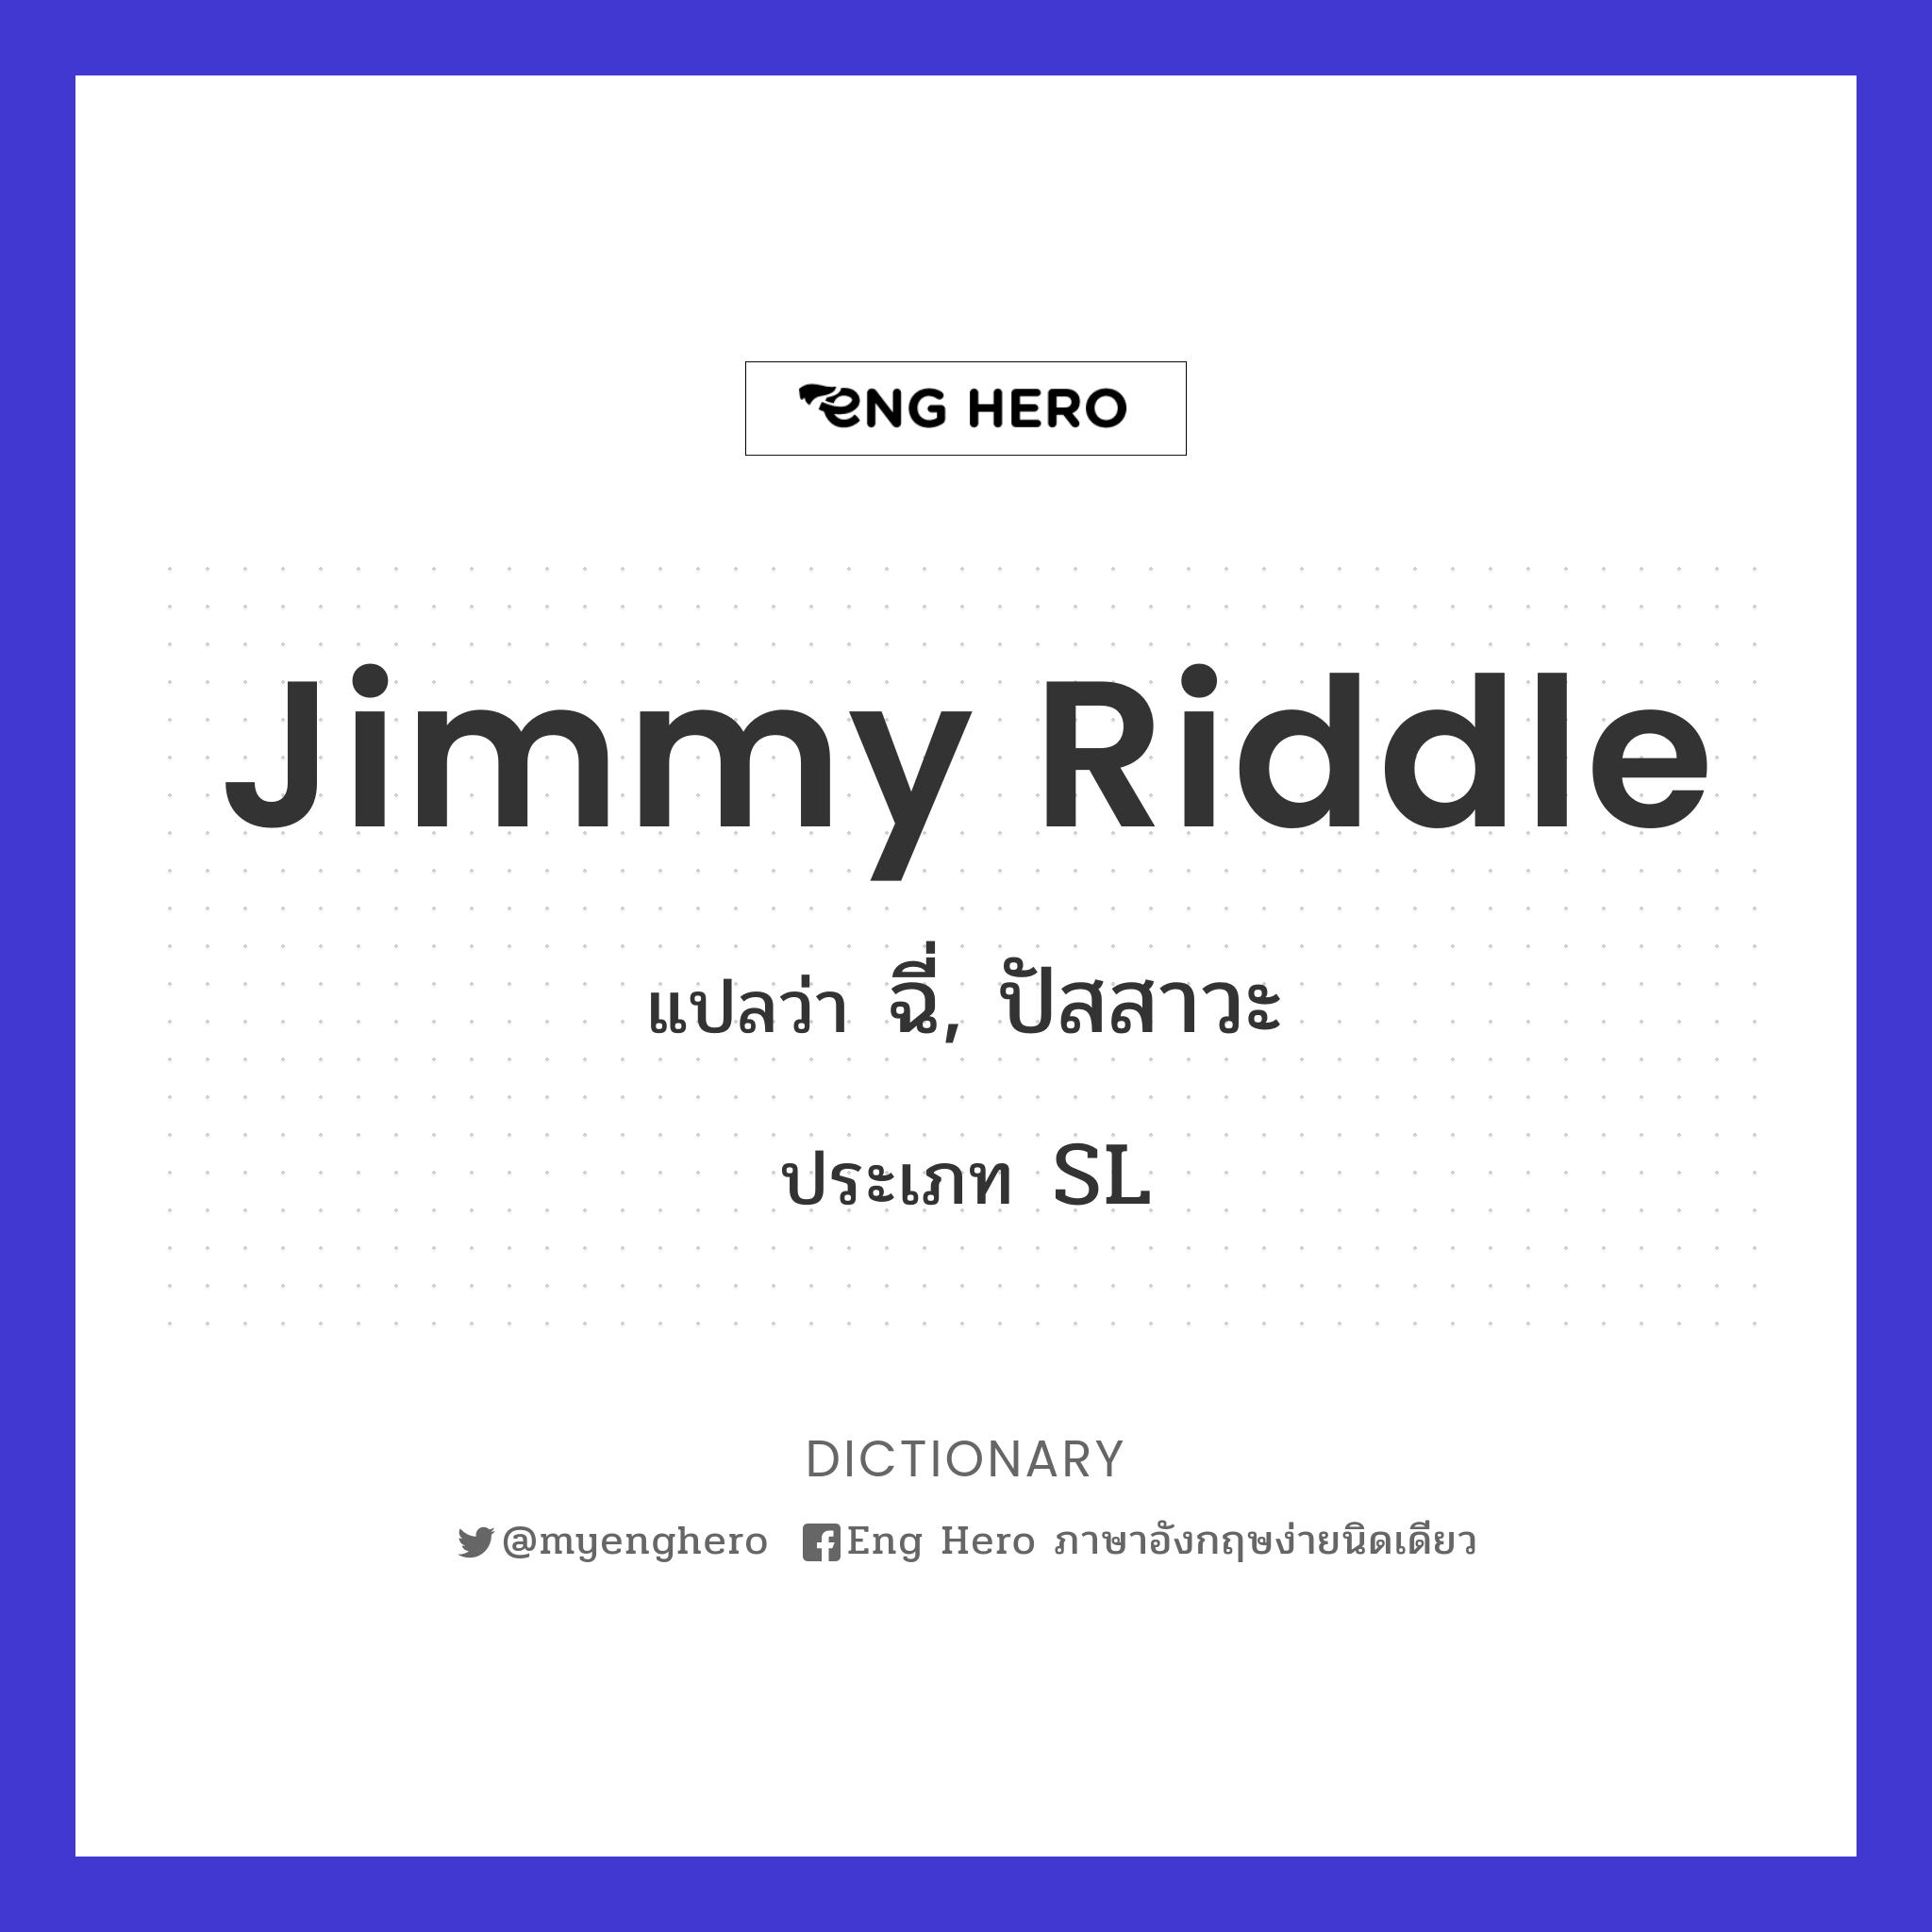 Jimmy Riddle